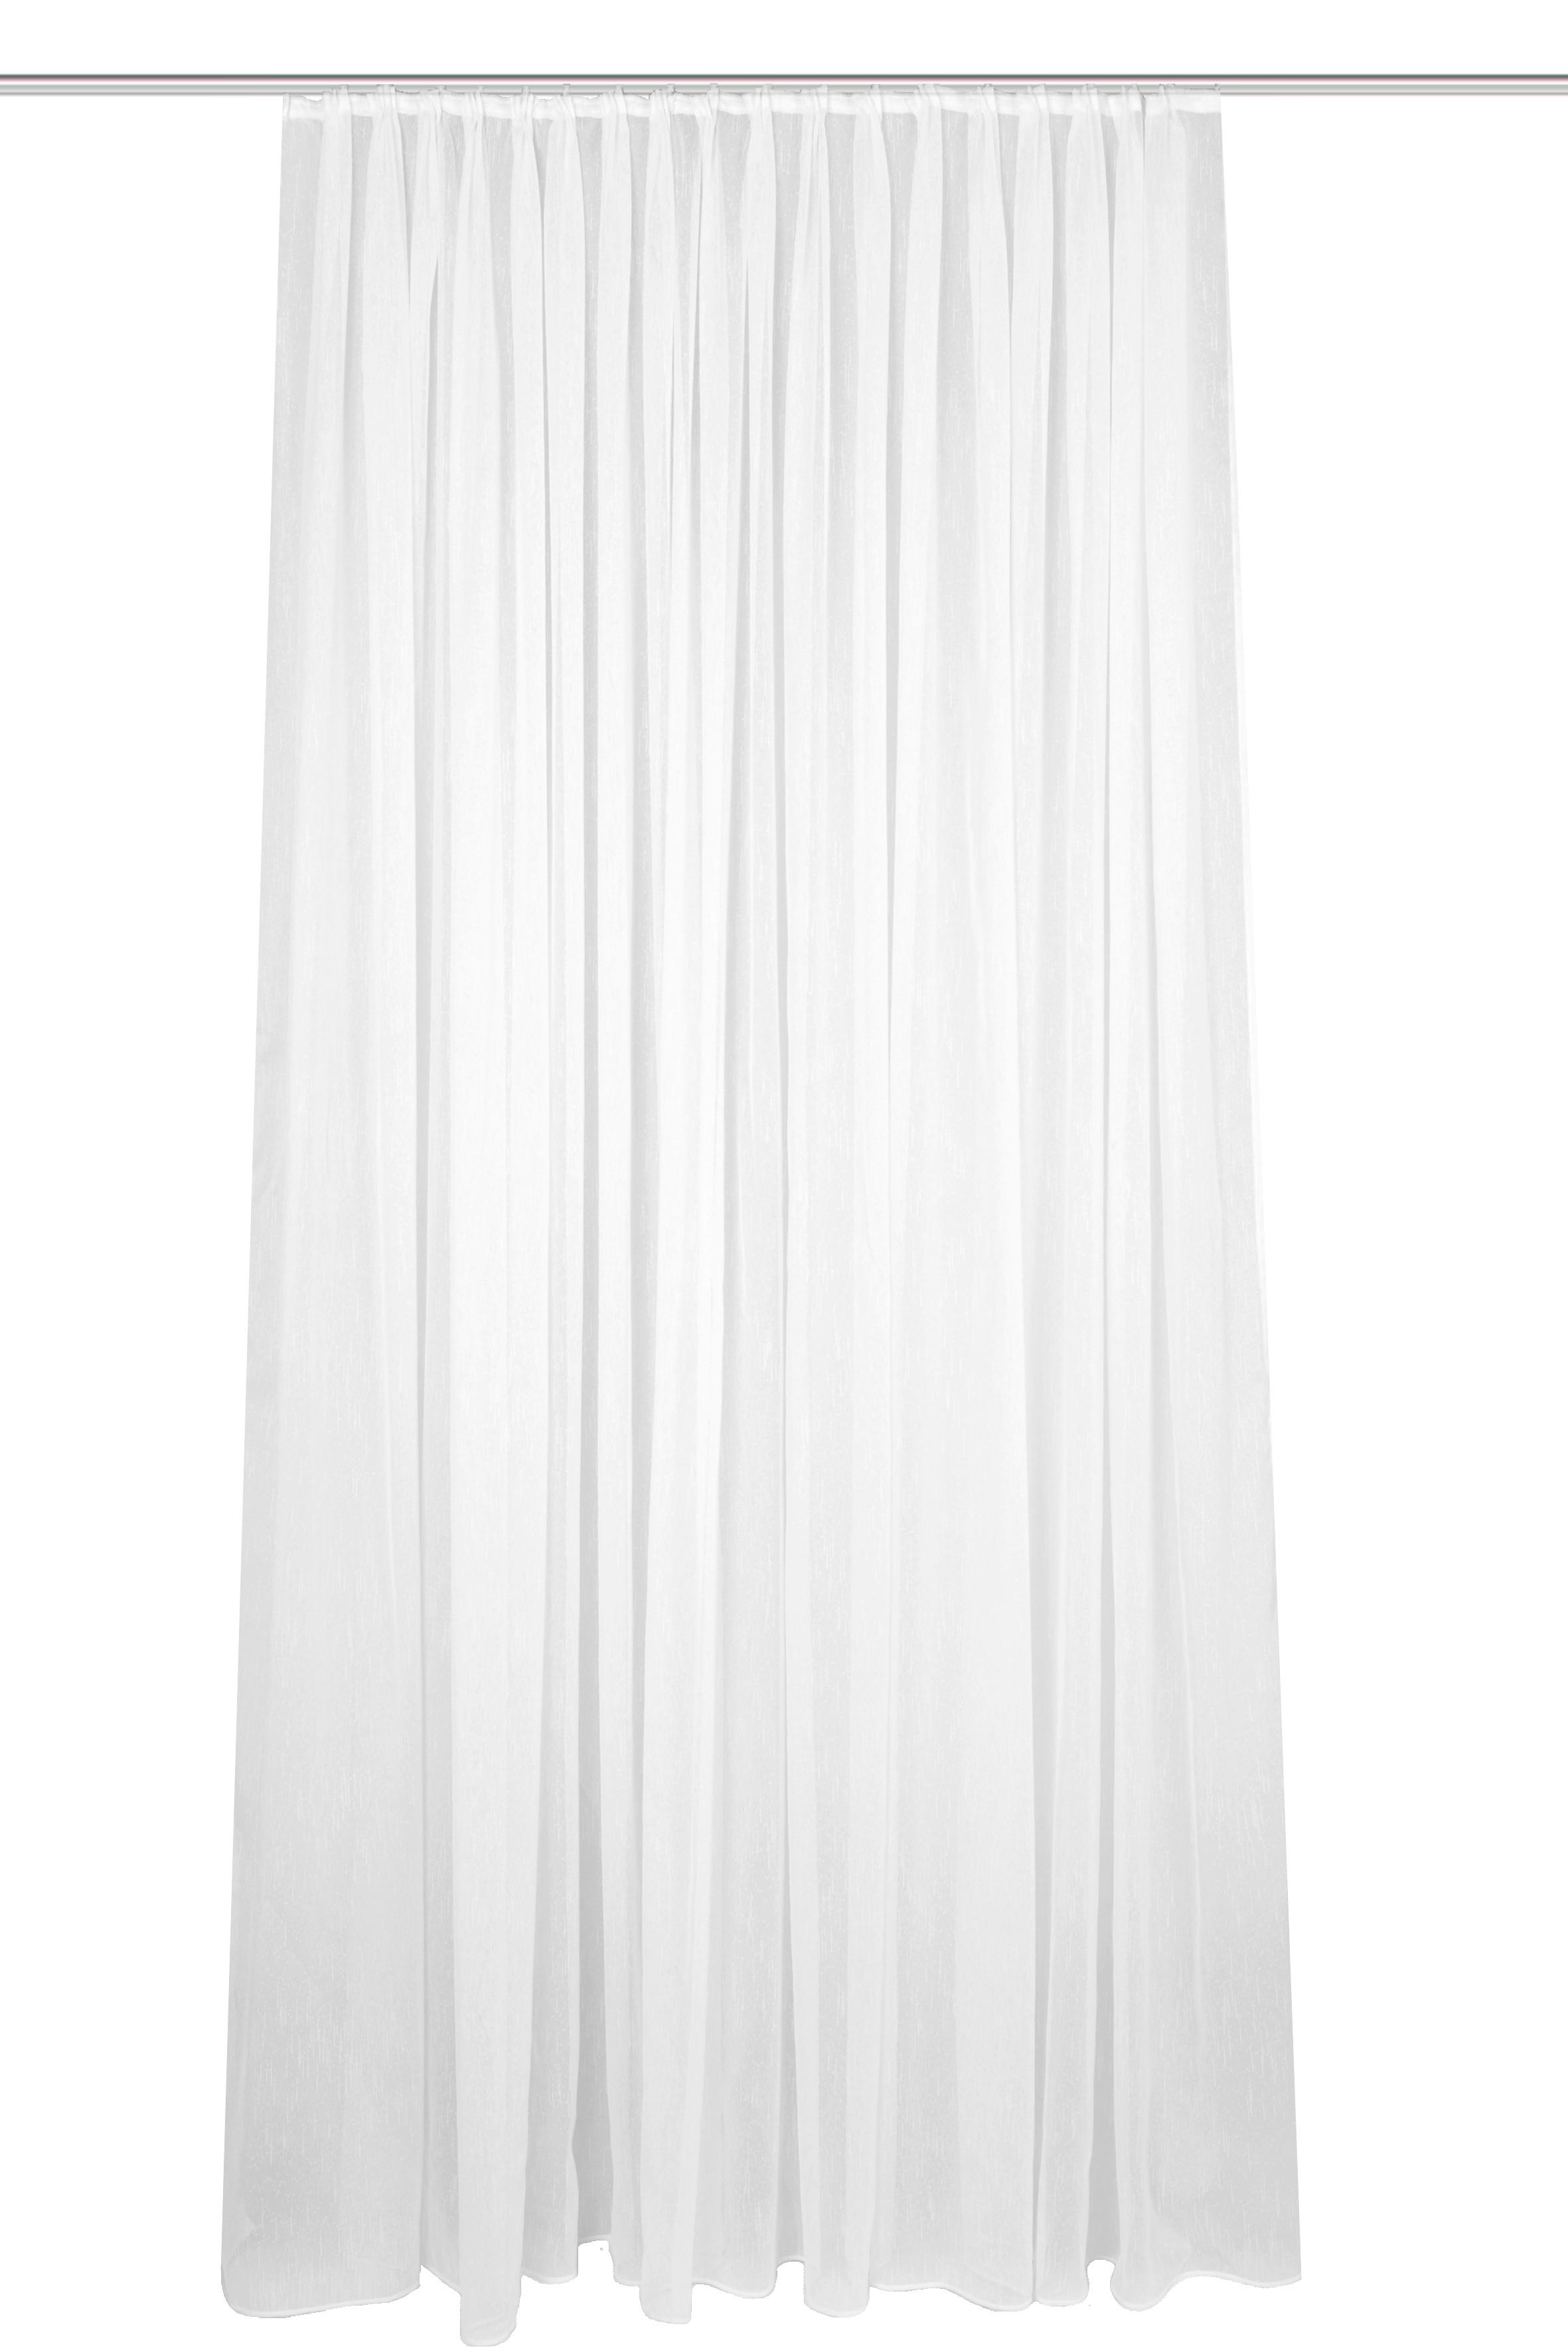 FERTIGSTORE  transparent  600/160 cm   - Weiß, Basics, Textil (600/160cm) - Schmidt W. Gmbh